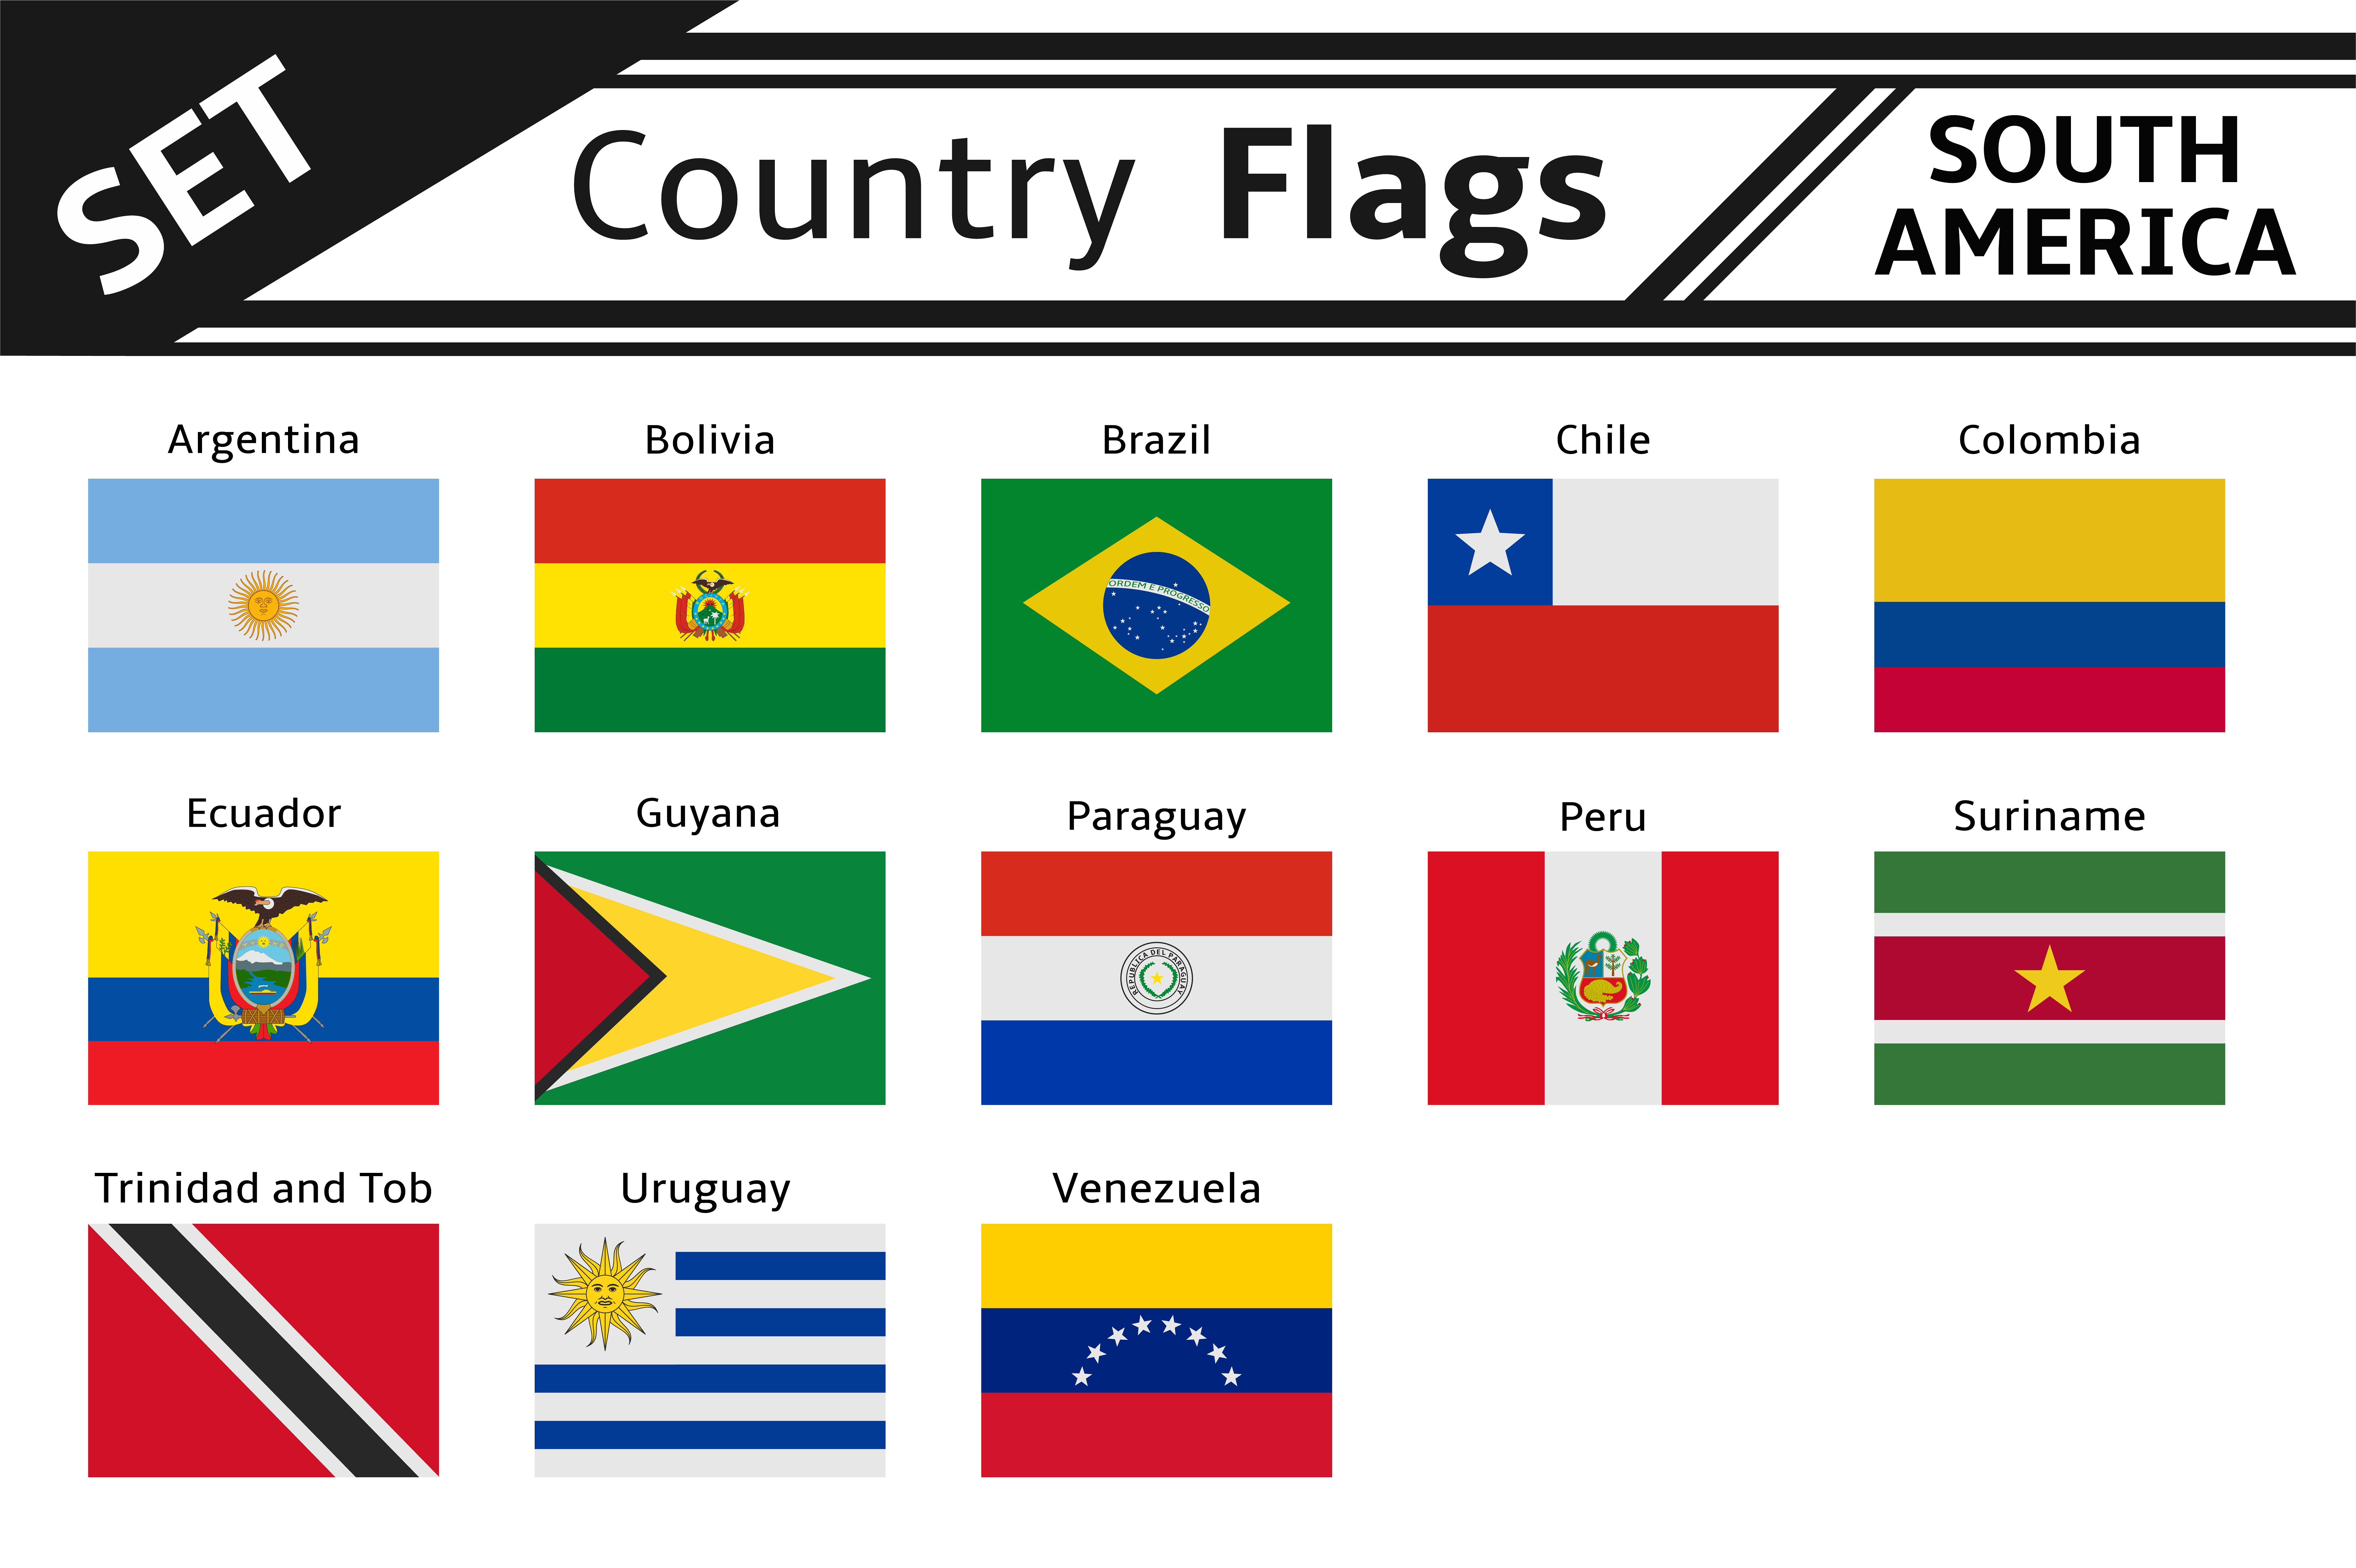 South american country. Флаг Южной Америки. Флаги стран Южной Америки. Флаги Южной Америки и островов. Флаги государств Южной Америки.